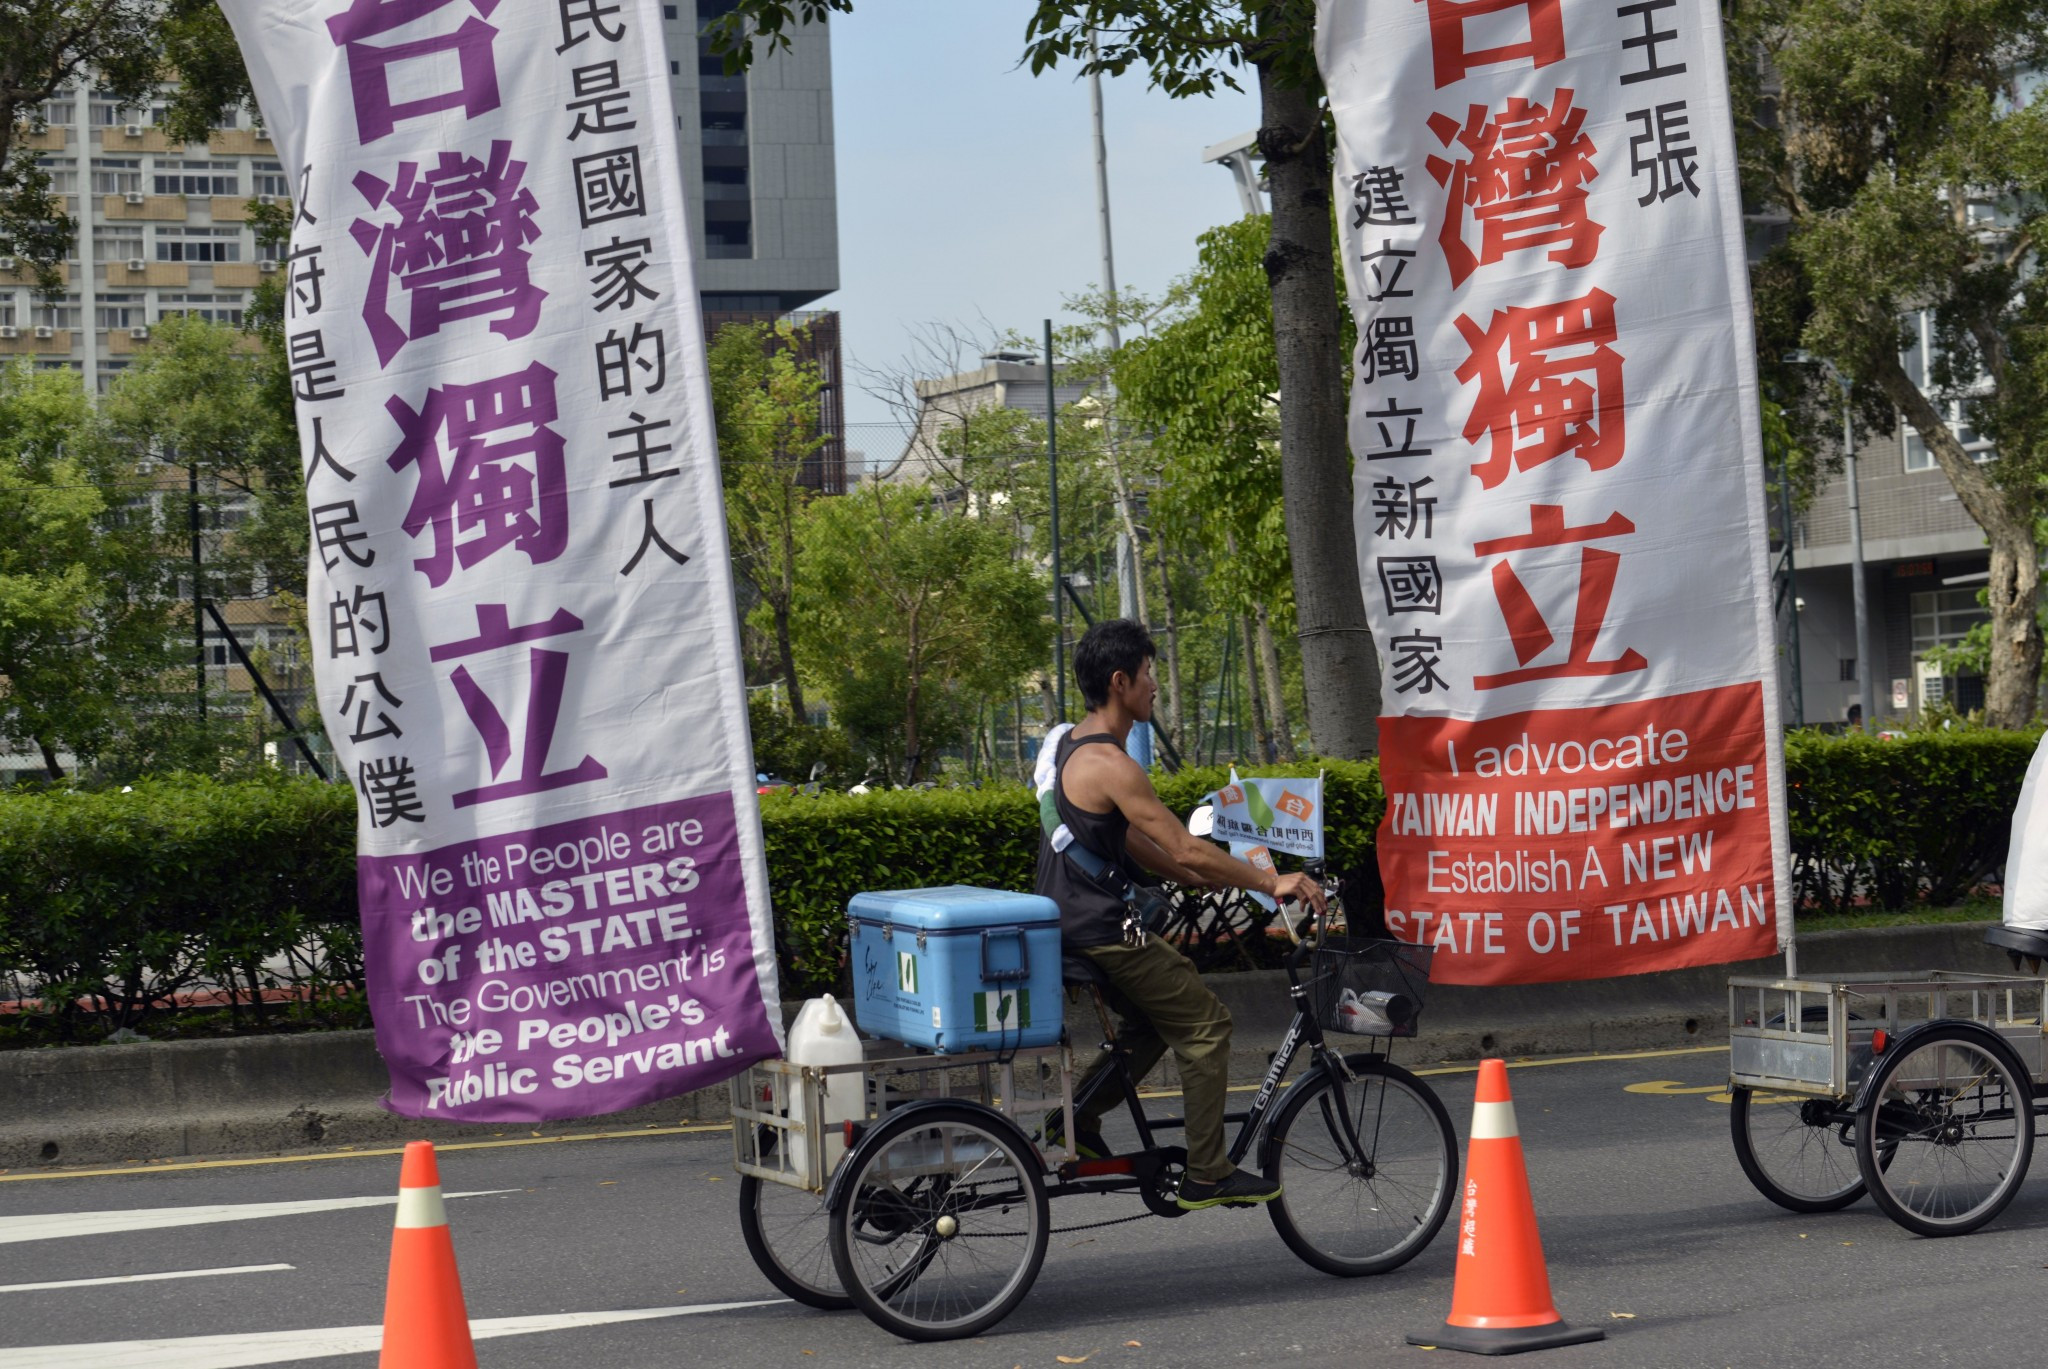 FISU insist use of Chinese Taipei name follows clear Olympic Movement protocols